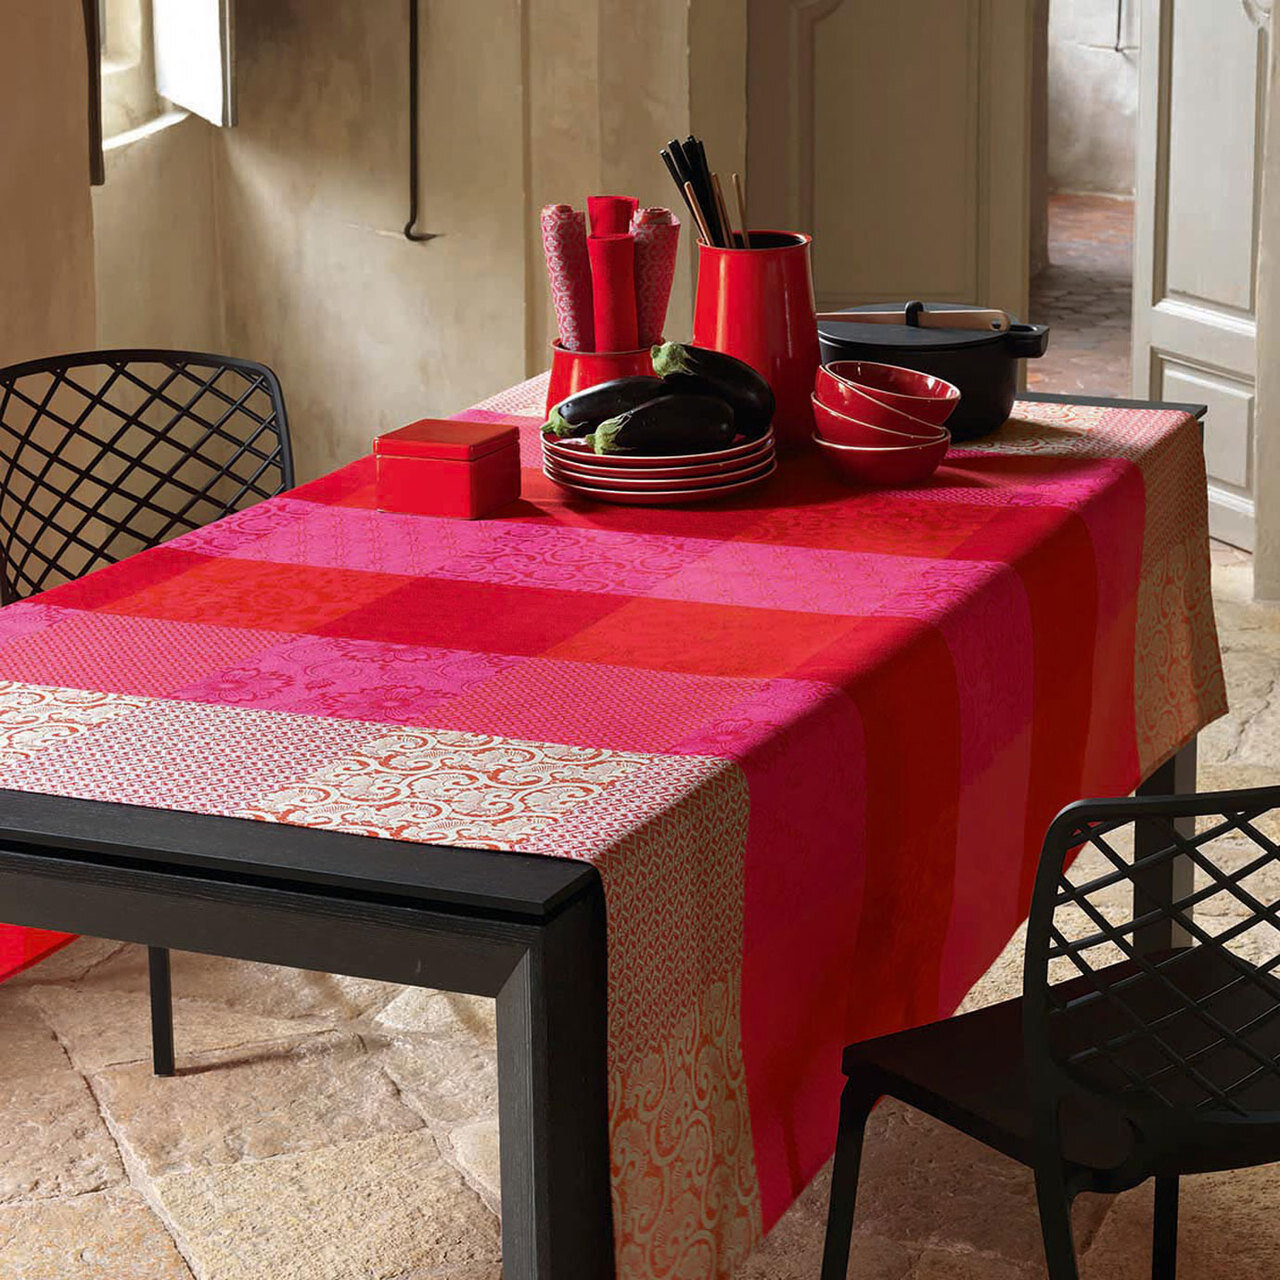 Le Jacquard Francais Tablecloth Kyoto Cherry 69 x 126 Cotton and Acrylicic